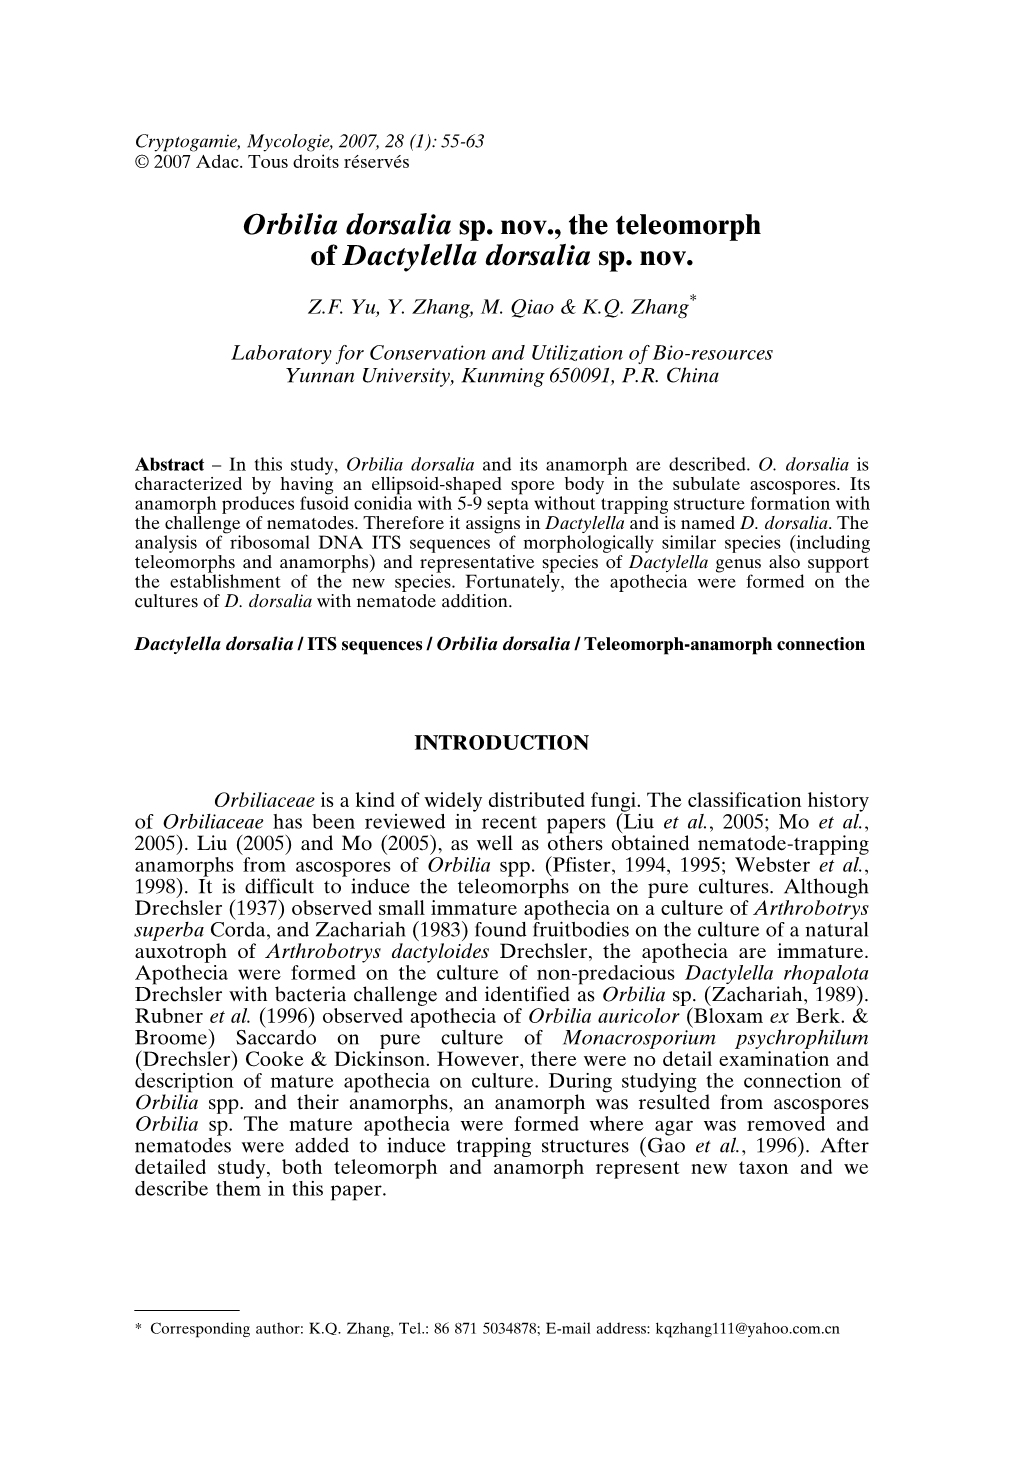 Orbilia Dorsalia Sp. Nov., the Teleomorph of Dactylella Dorsalia Sp